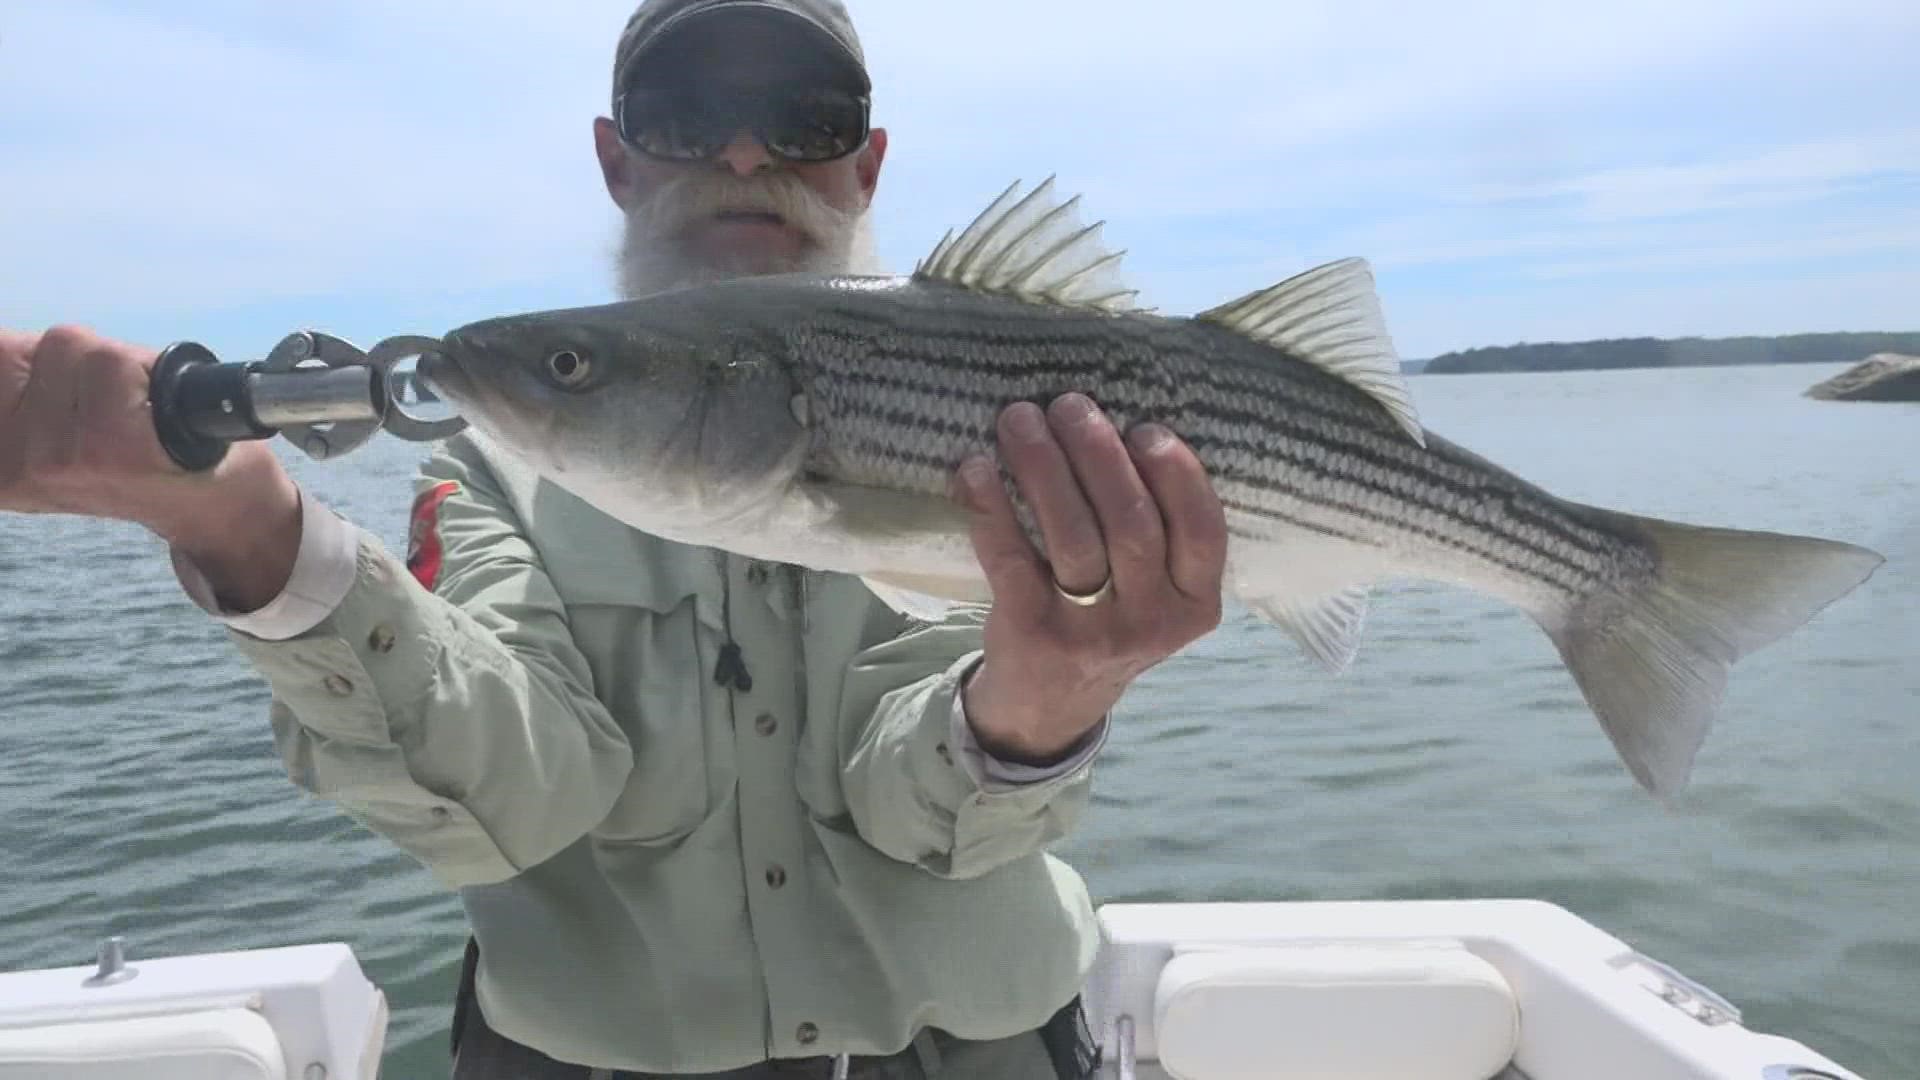 Striped bass in Maine see big season, worries fishing regulators